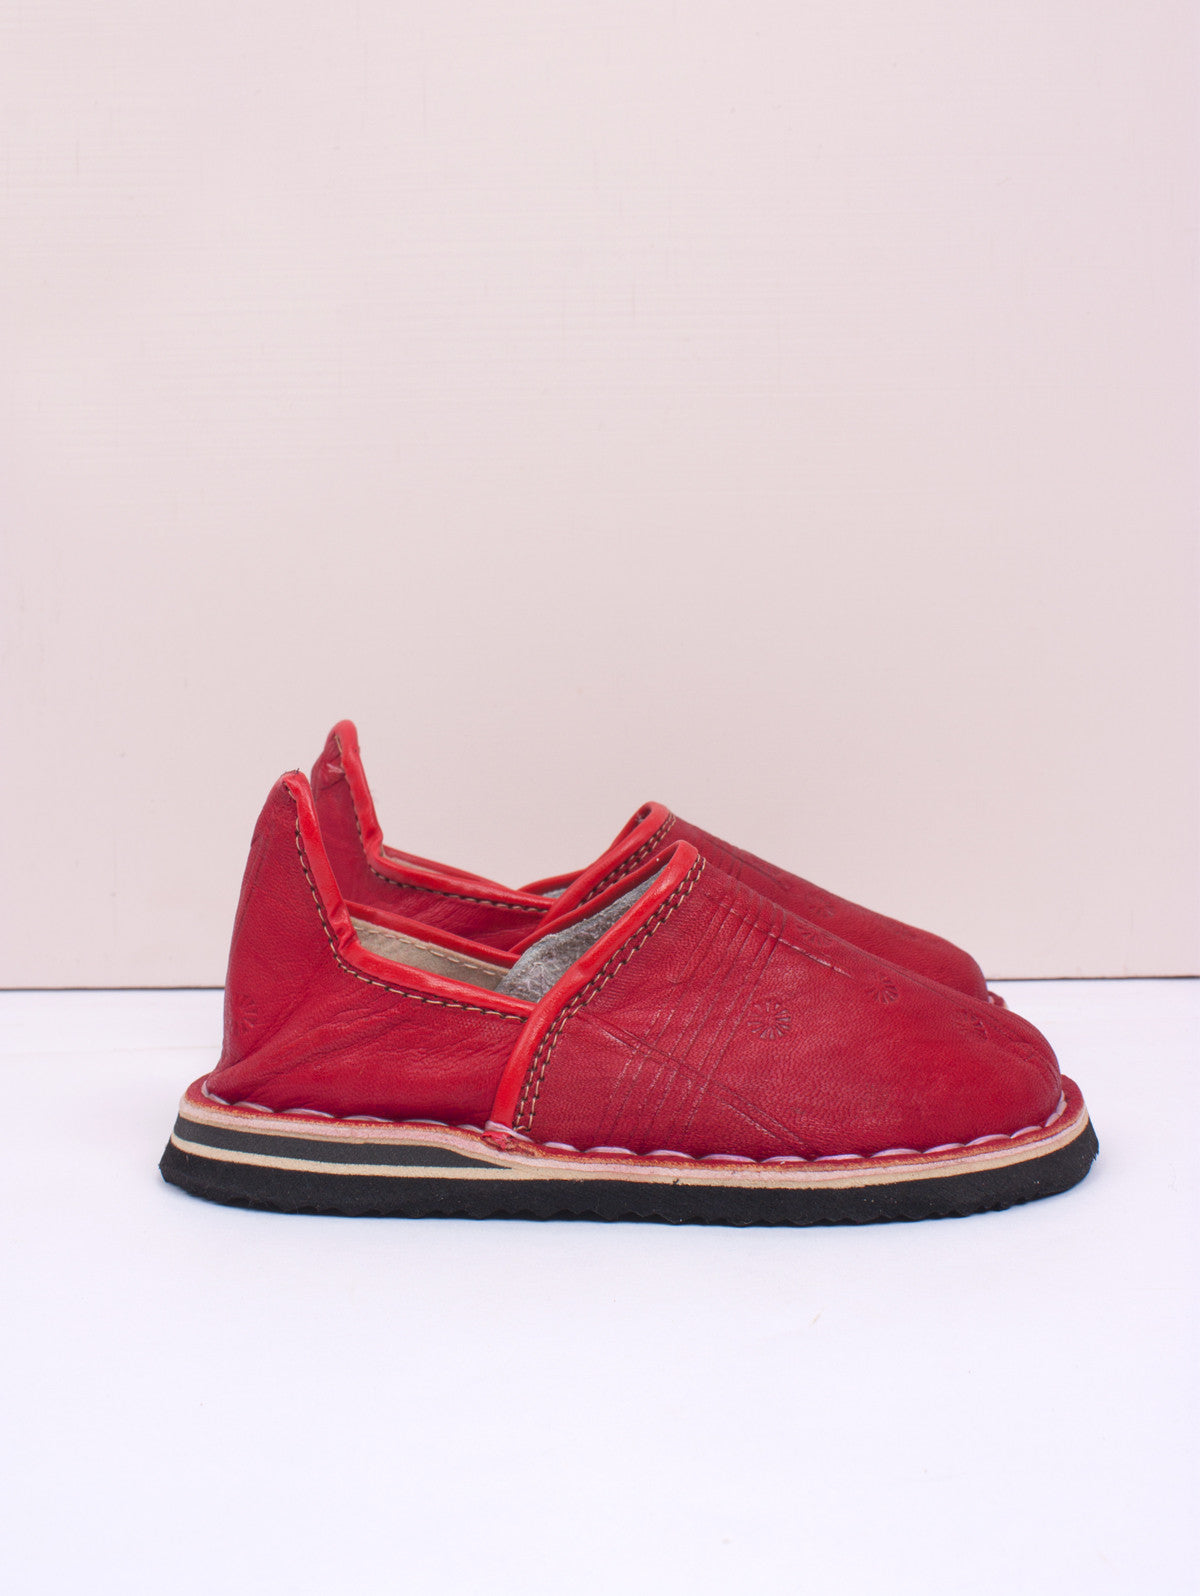 Red Mini Kids Berber Babouche Leather Slippers | Bohemia Design